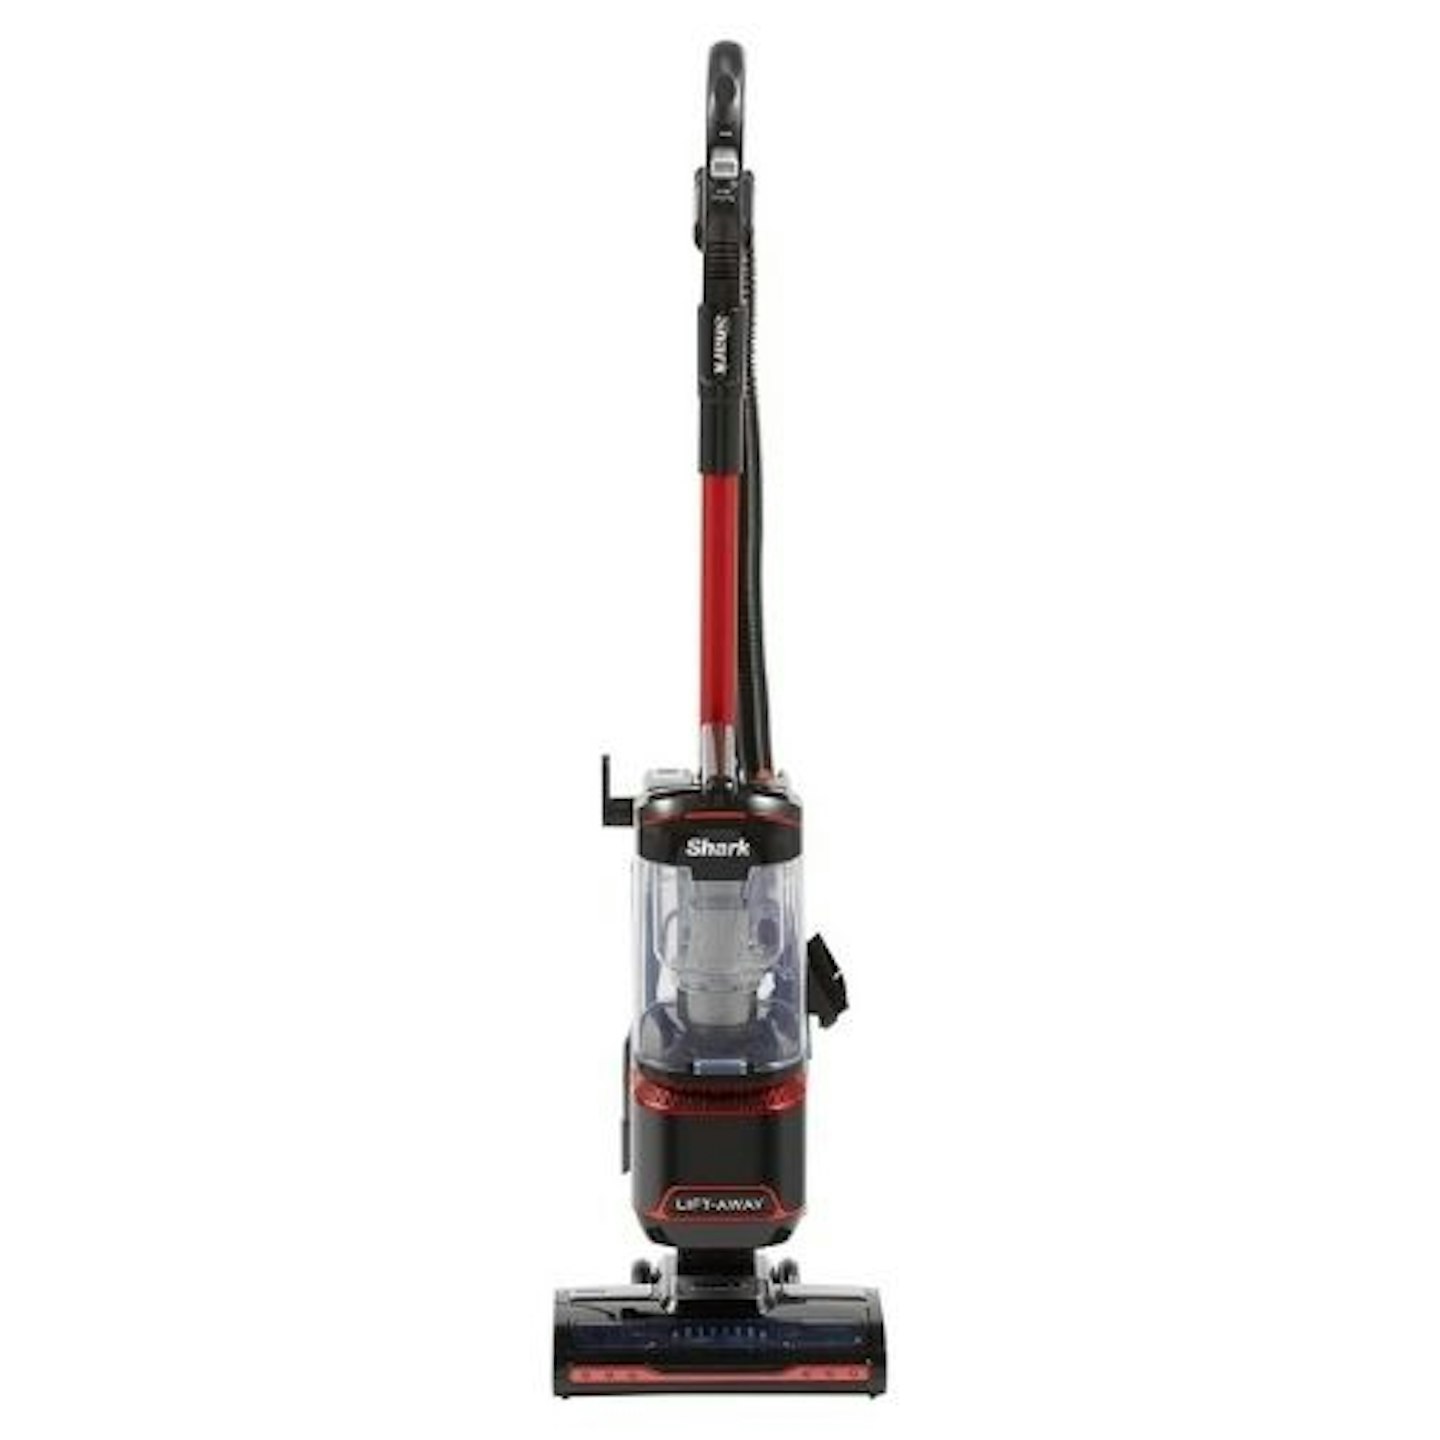 Shark Upright Vacuum Cleaner [NV602UKT], Lift-Away, Red/Black